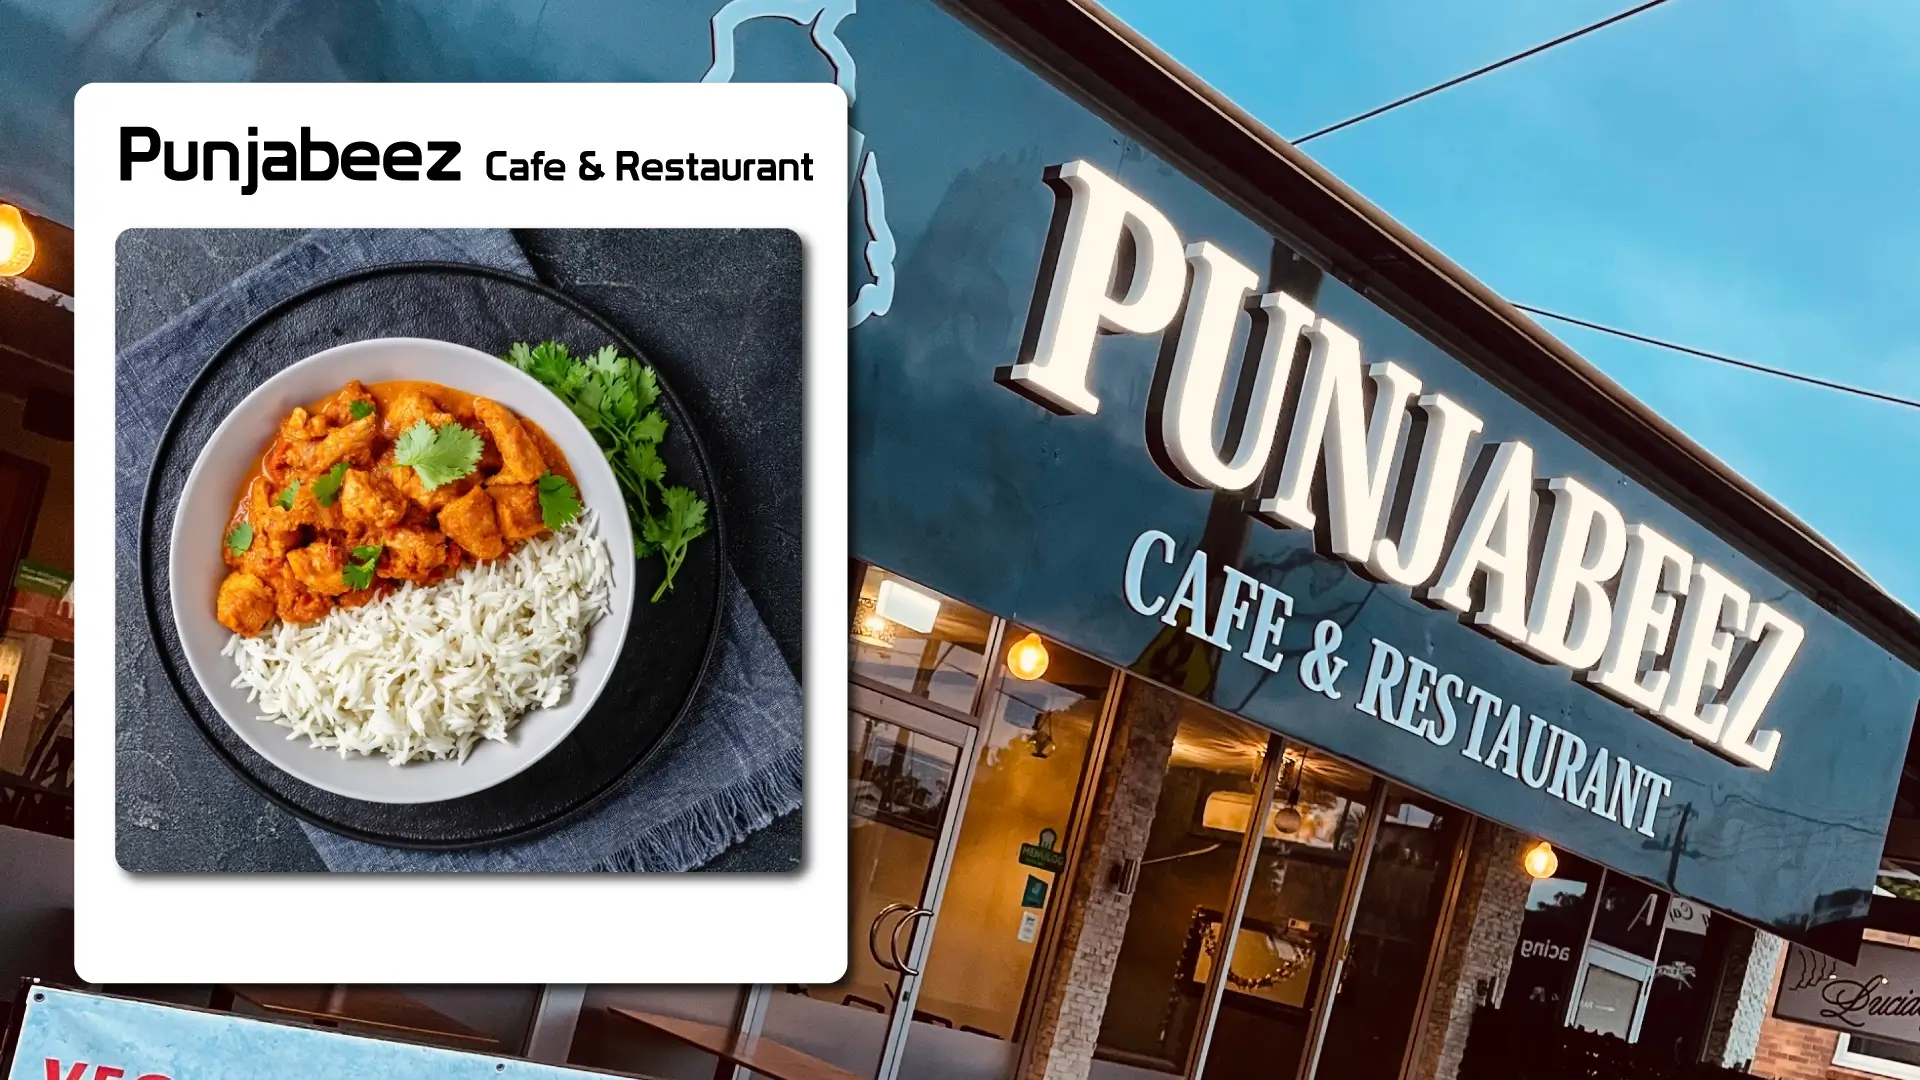 Punjabeez Cafe & Restaurant